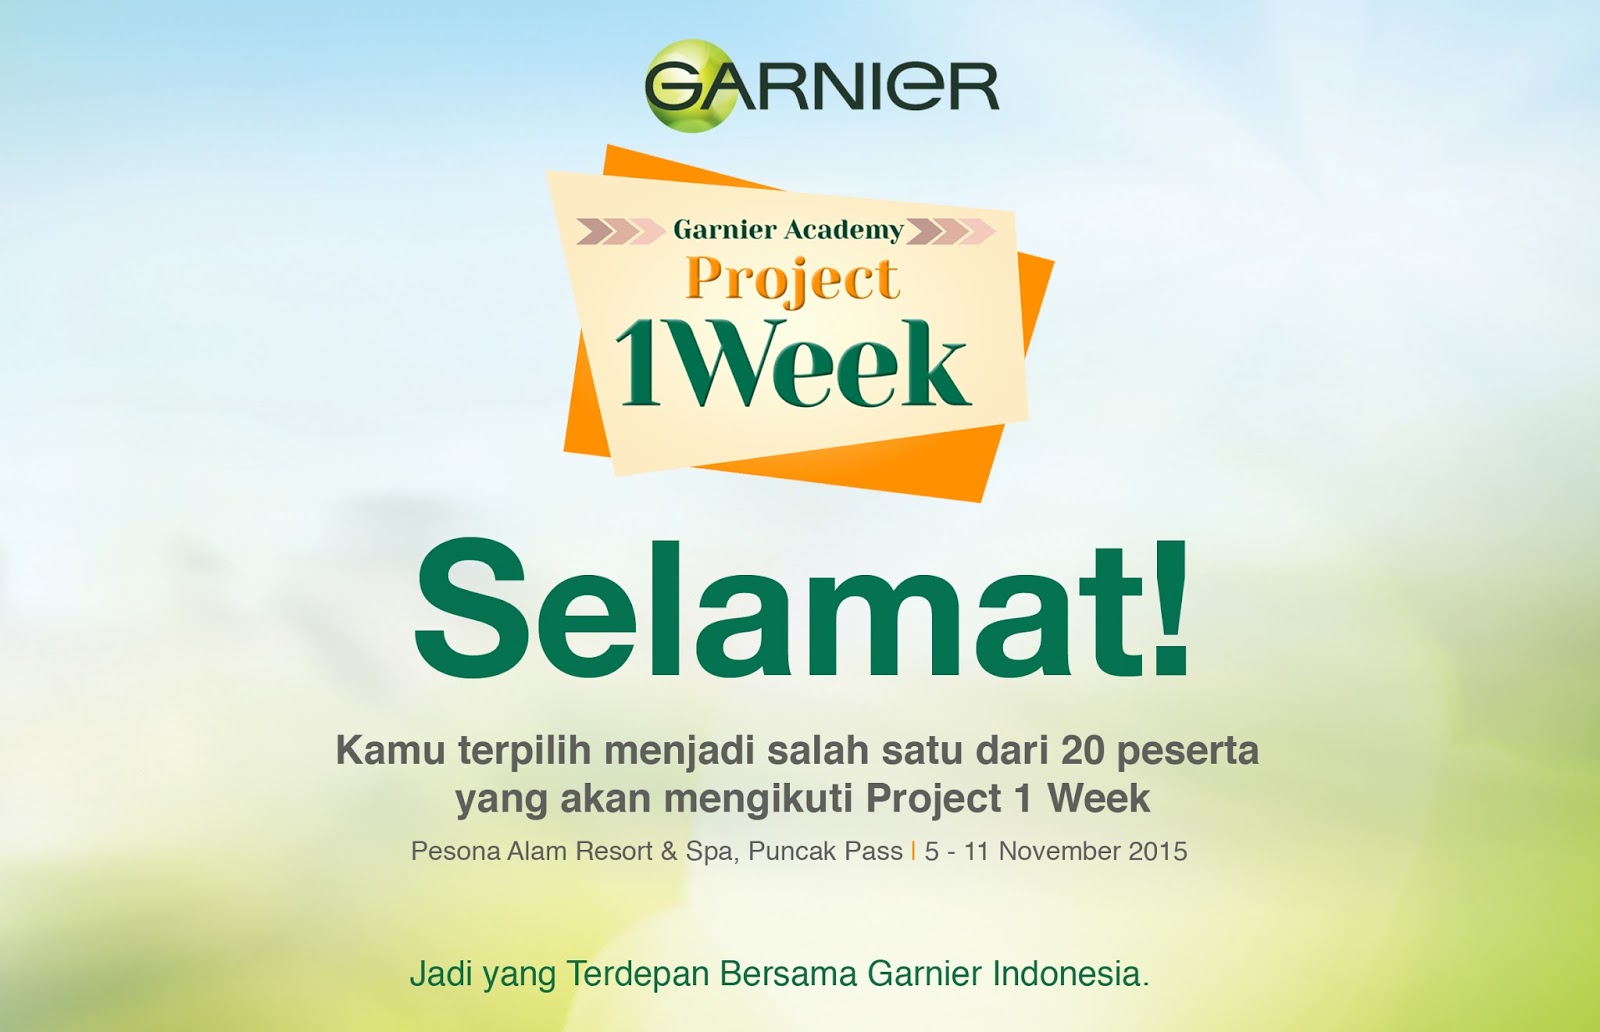 Alumni Garnier Academy Project 1 Week